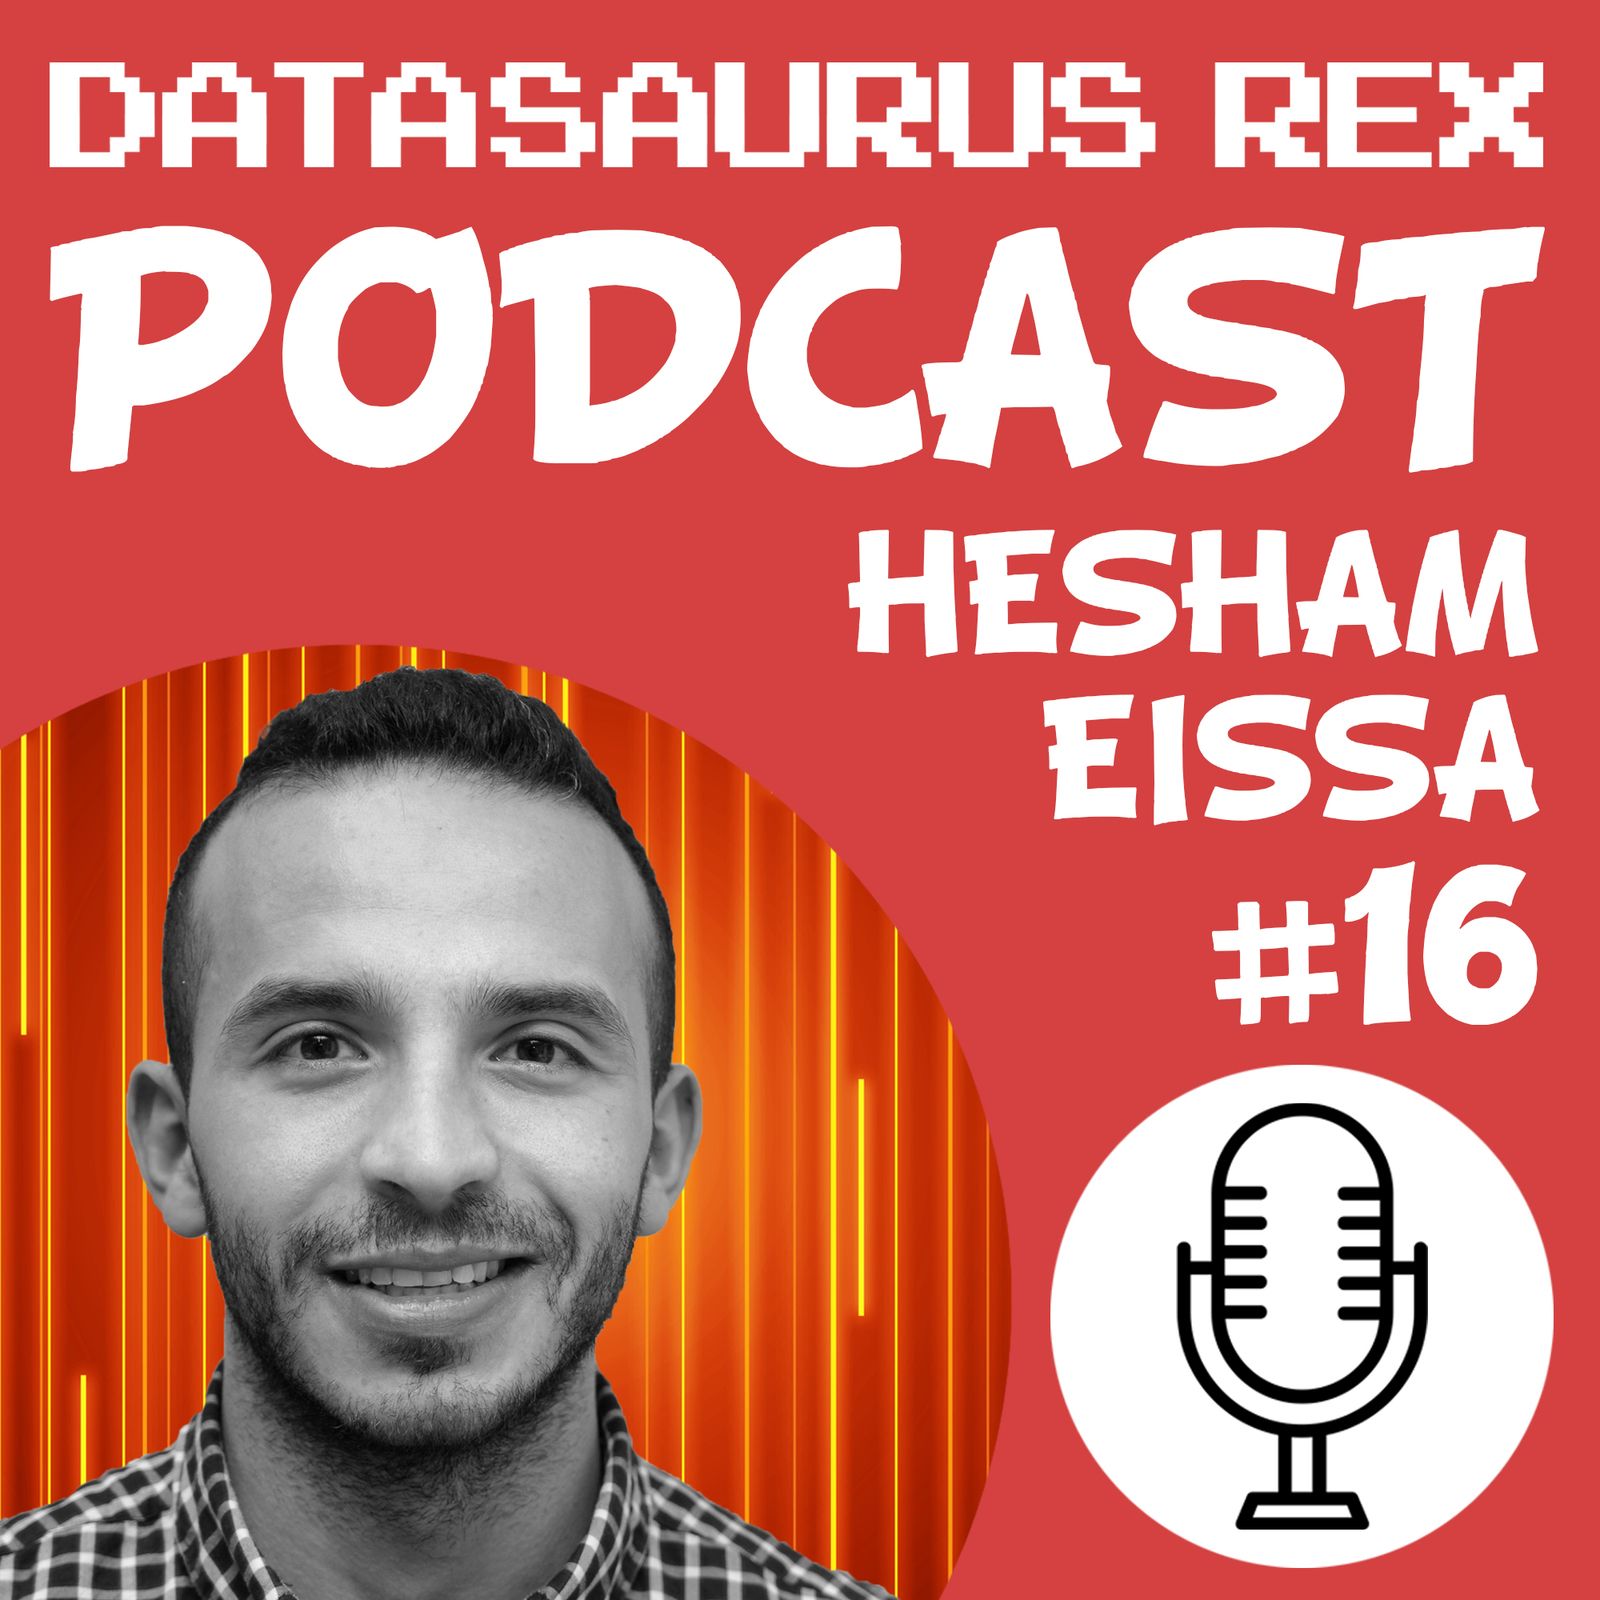 16: EP#16 - Hesham Eissa